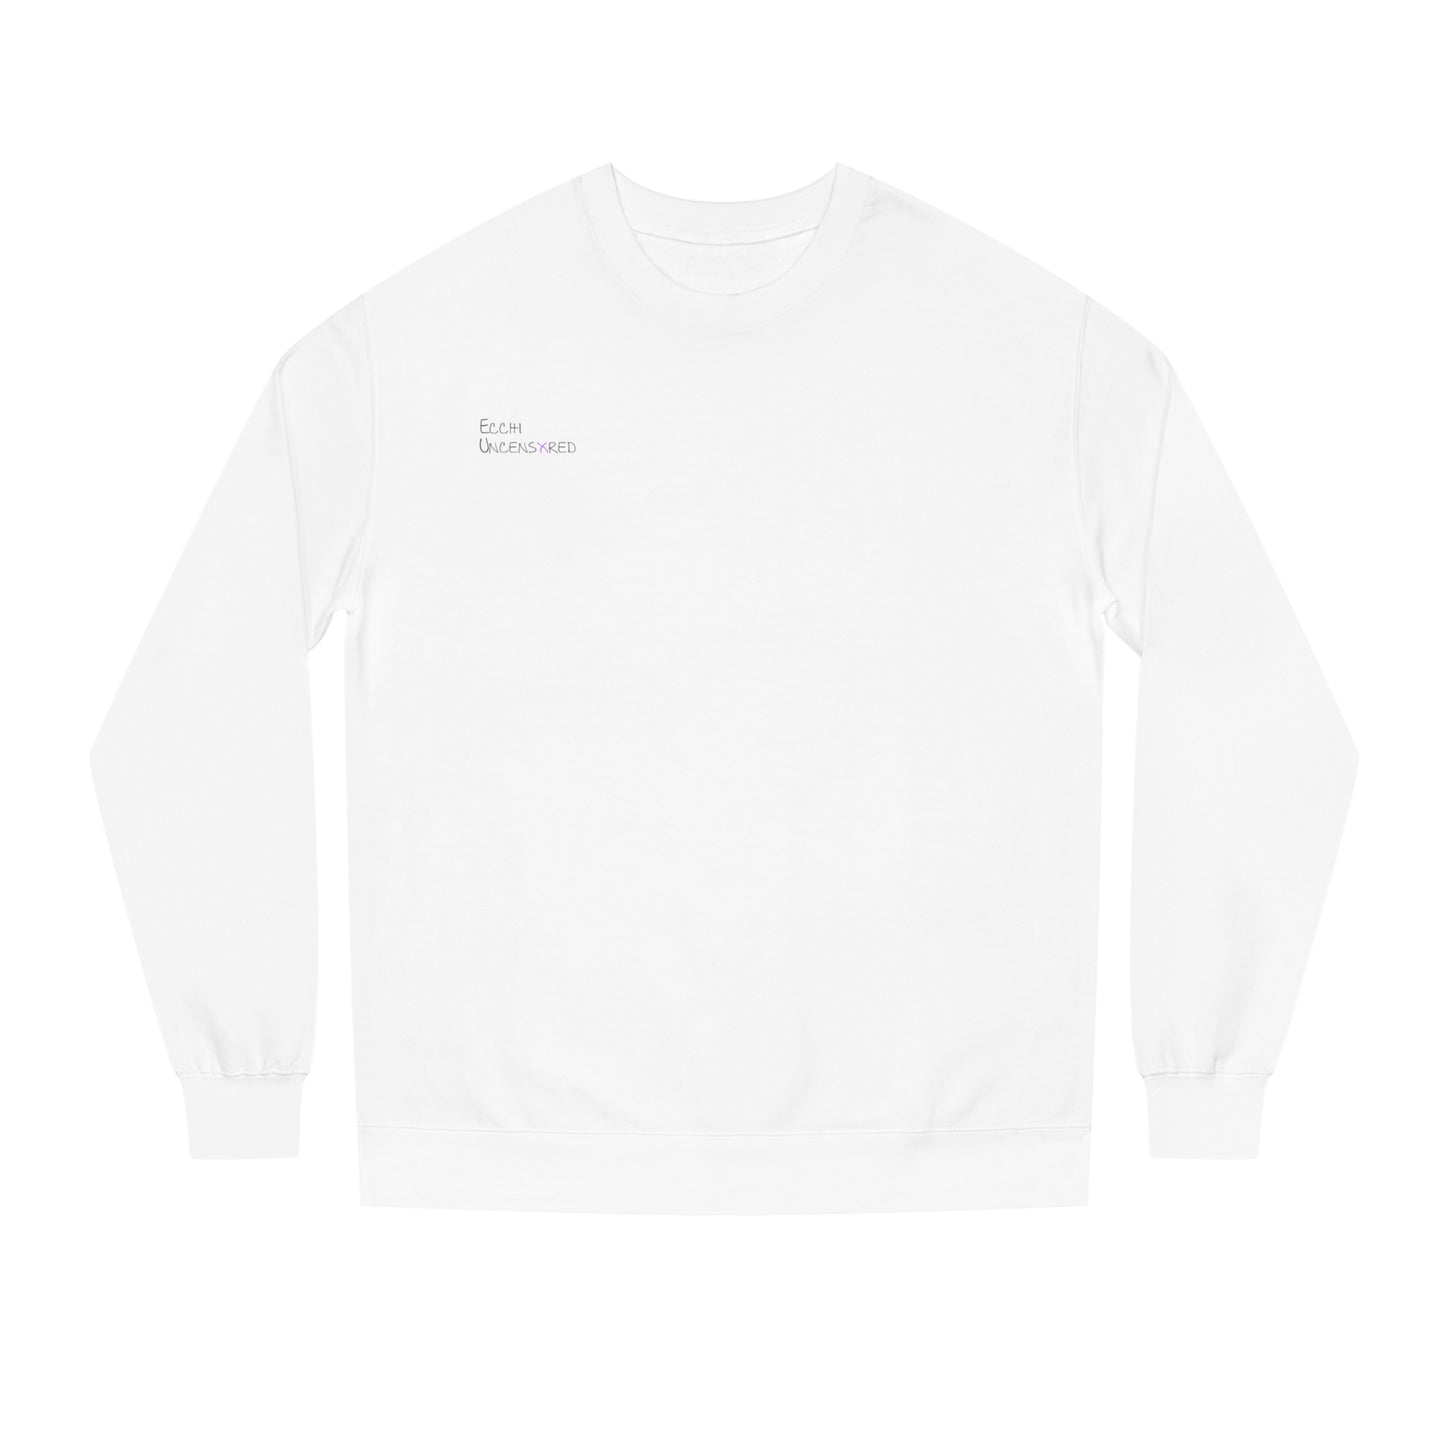 Send Nudes • Crew Neck Sweatshirt • Print